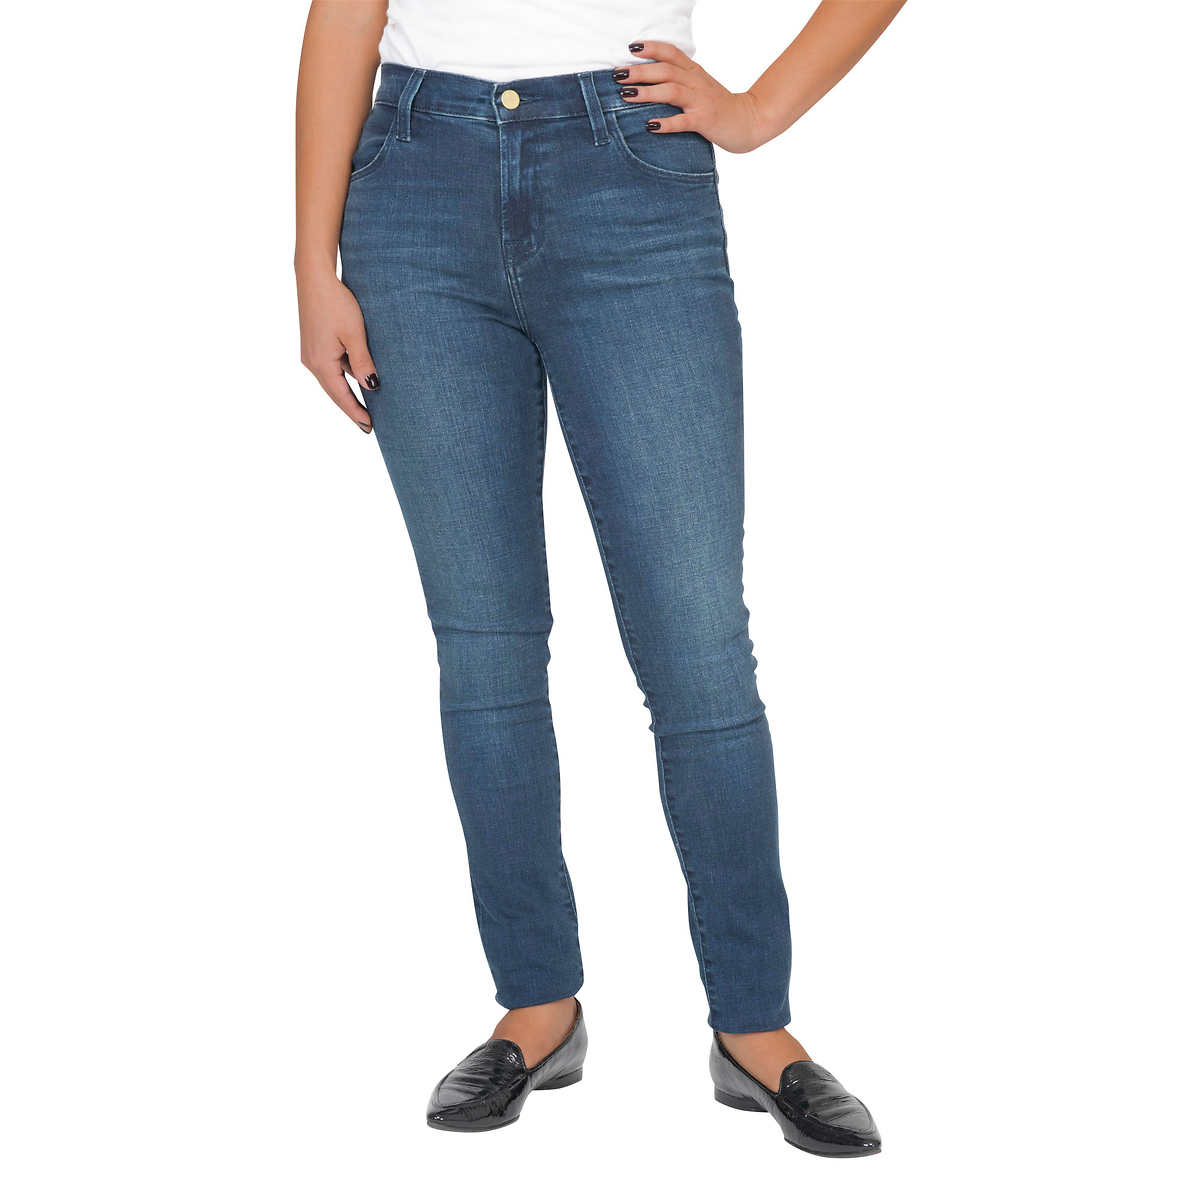 J BRAND Women`s Jeans Cherry Skinny Leg size-27 RN#117965 Waist